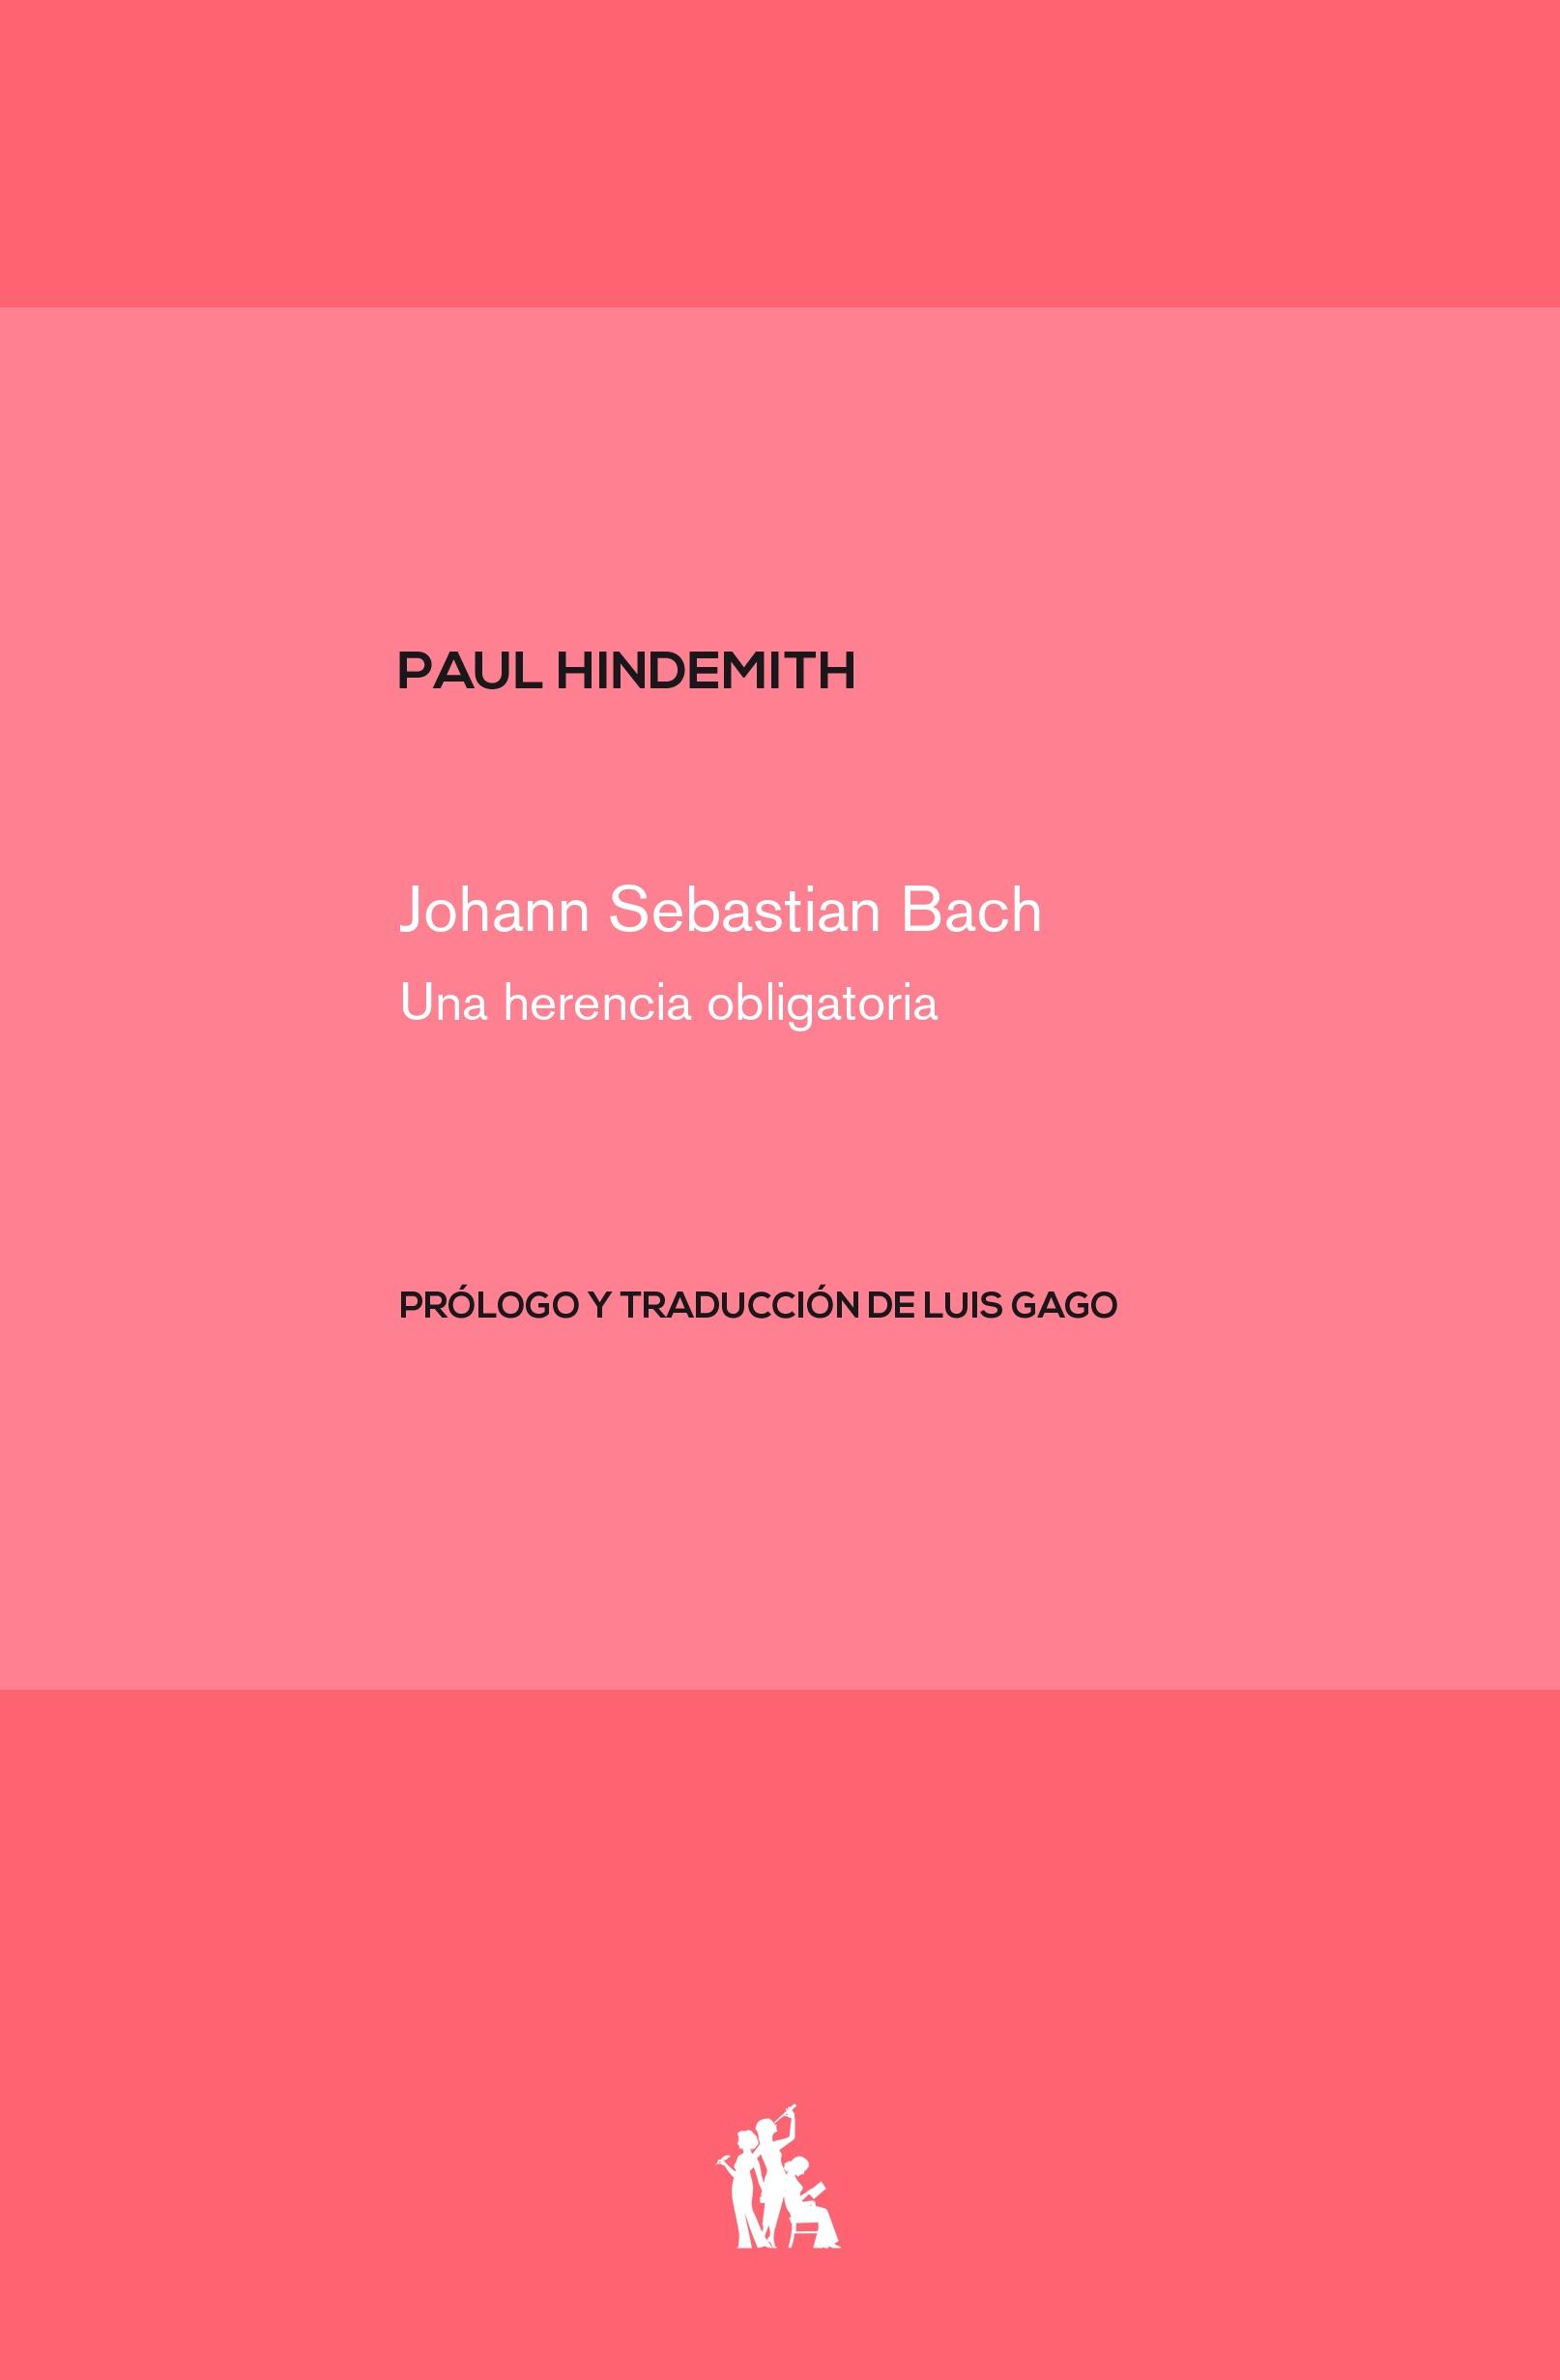 Johann Sebastian Bach "Una Herencia Obligatoria"